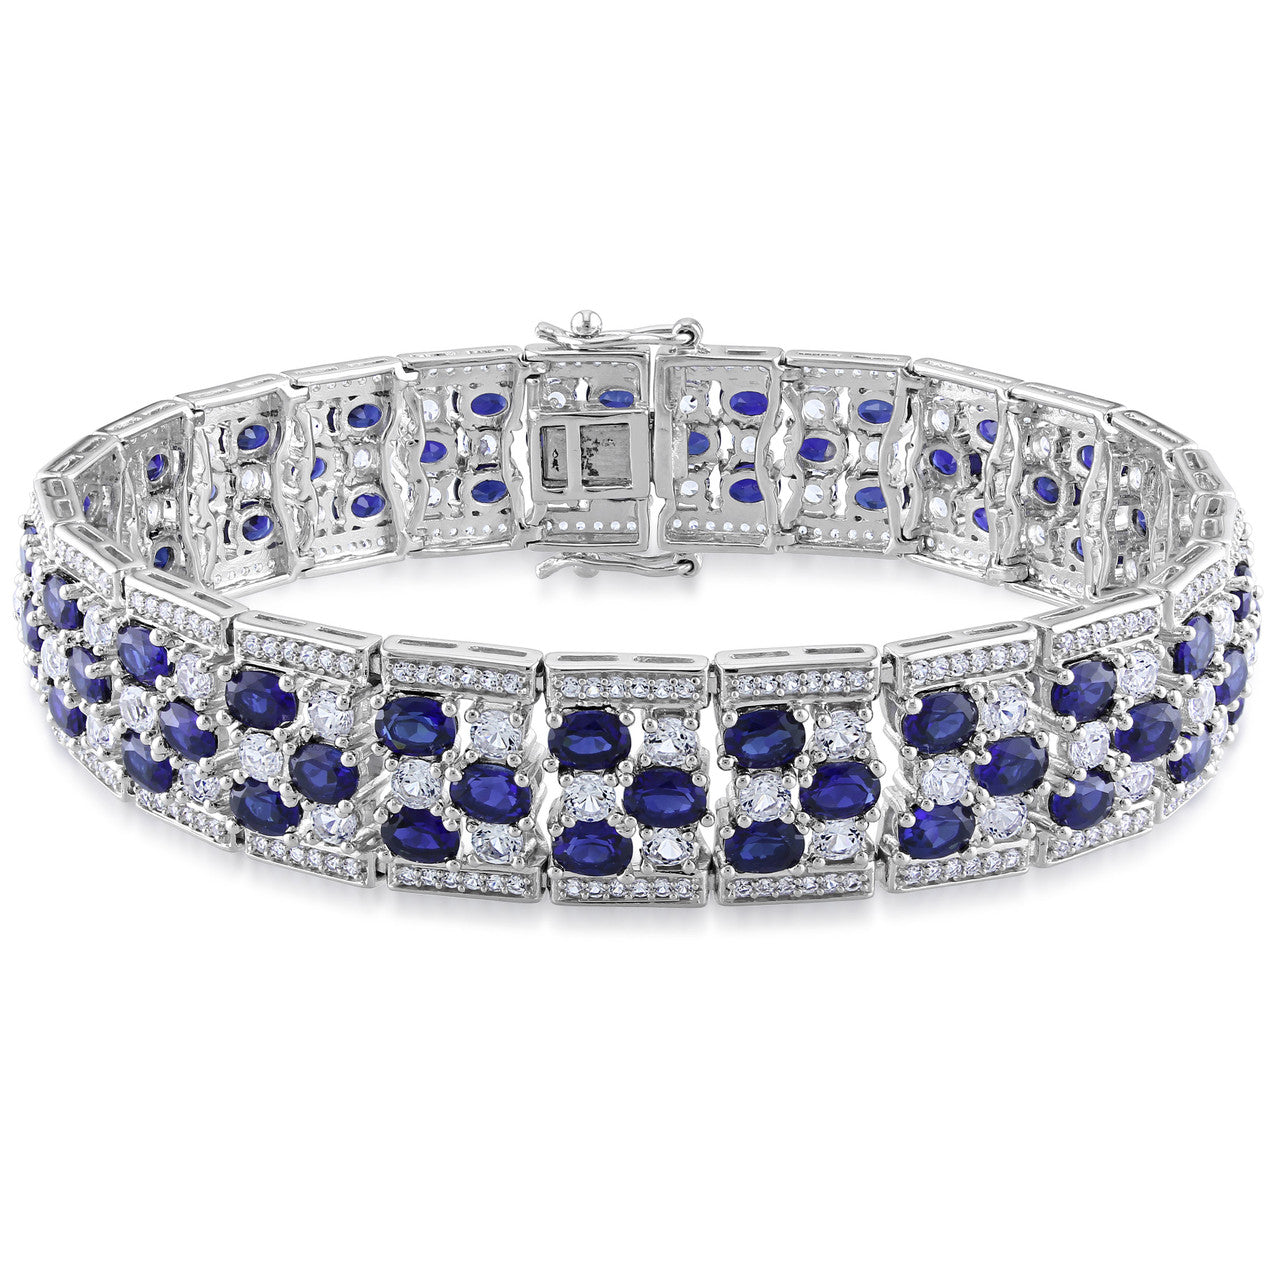 Ice Jewellery 26 1/5 CT TGW Created Blue Sapphire Created White Sapphire Bracelet Silver Length (inches): 7.25 - 75000002061 | Ice Jewellery Australia